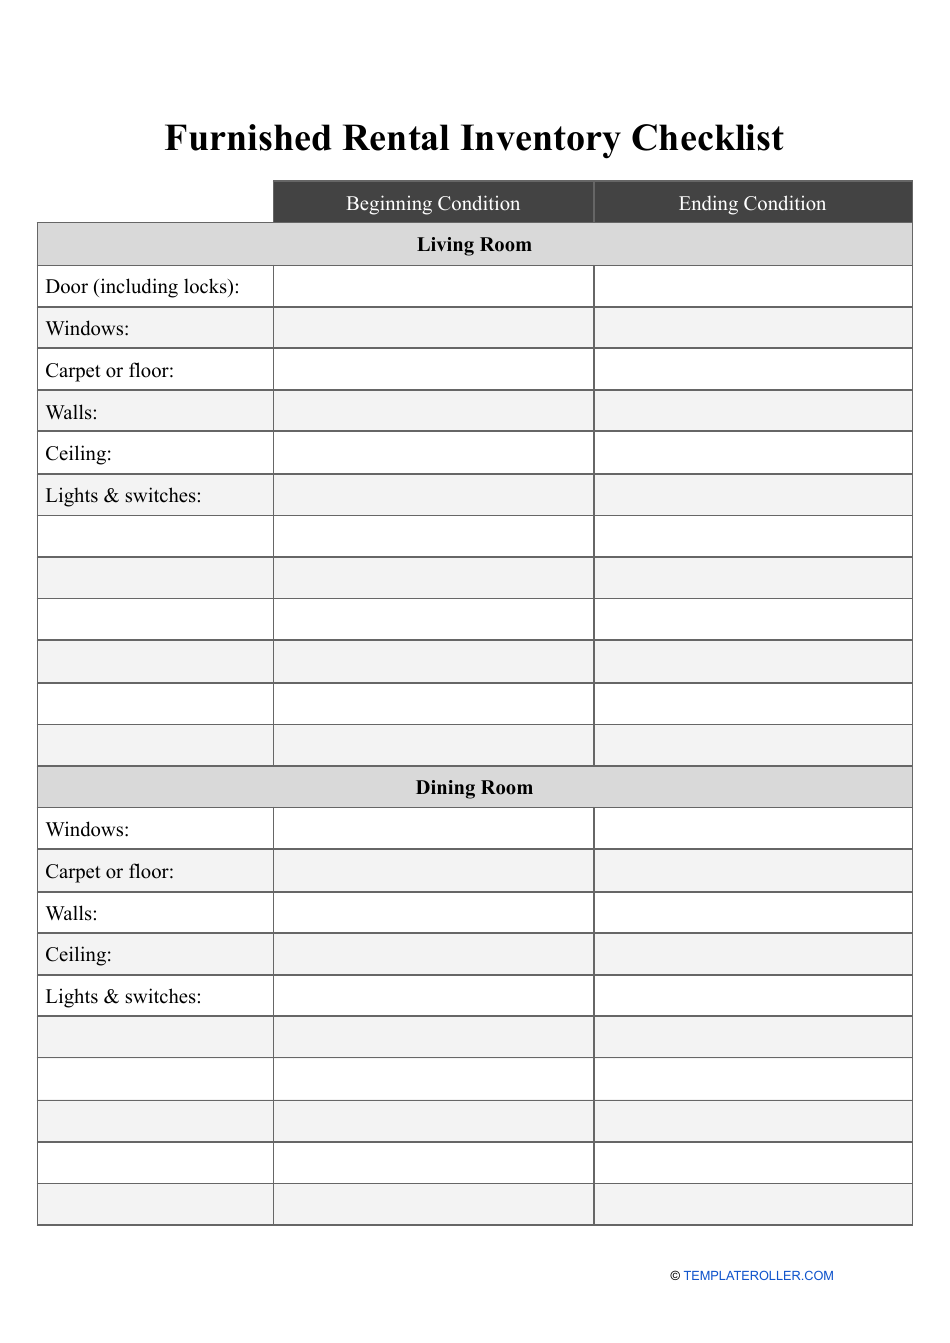 Furnished Rental Inventory Checklist, Page 1